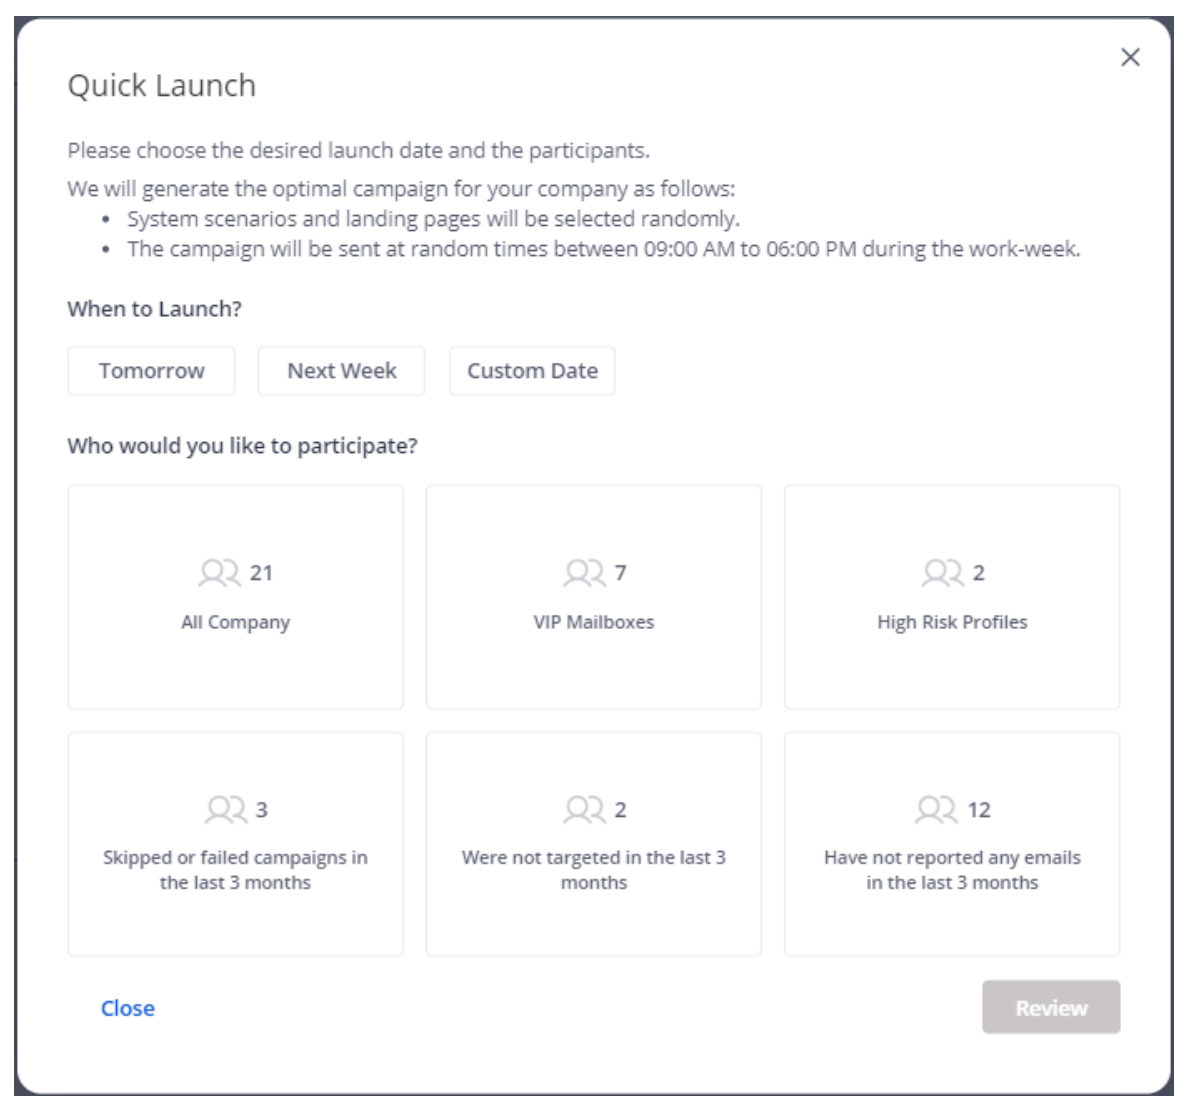 The Quick Launch menu